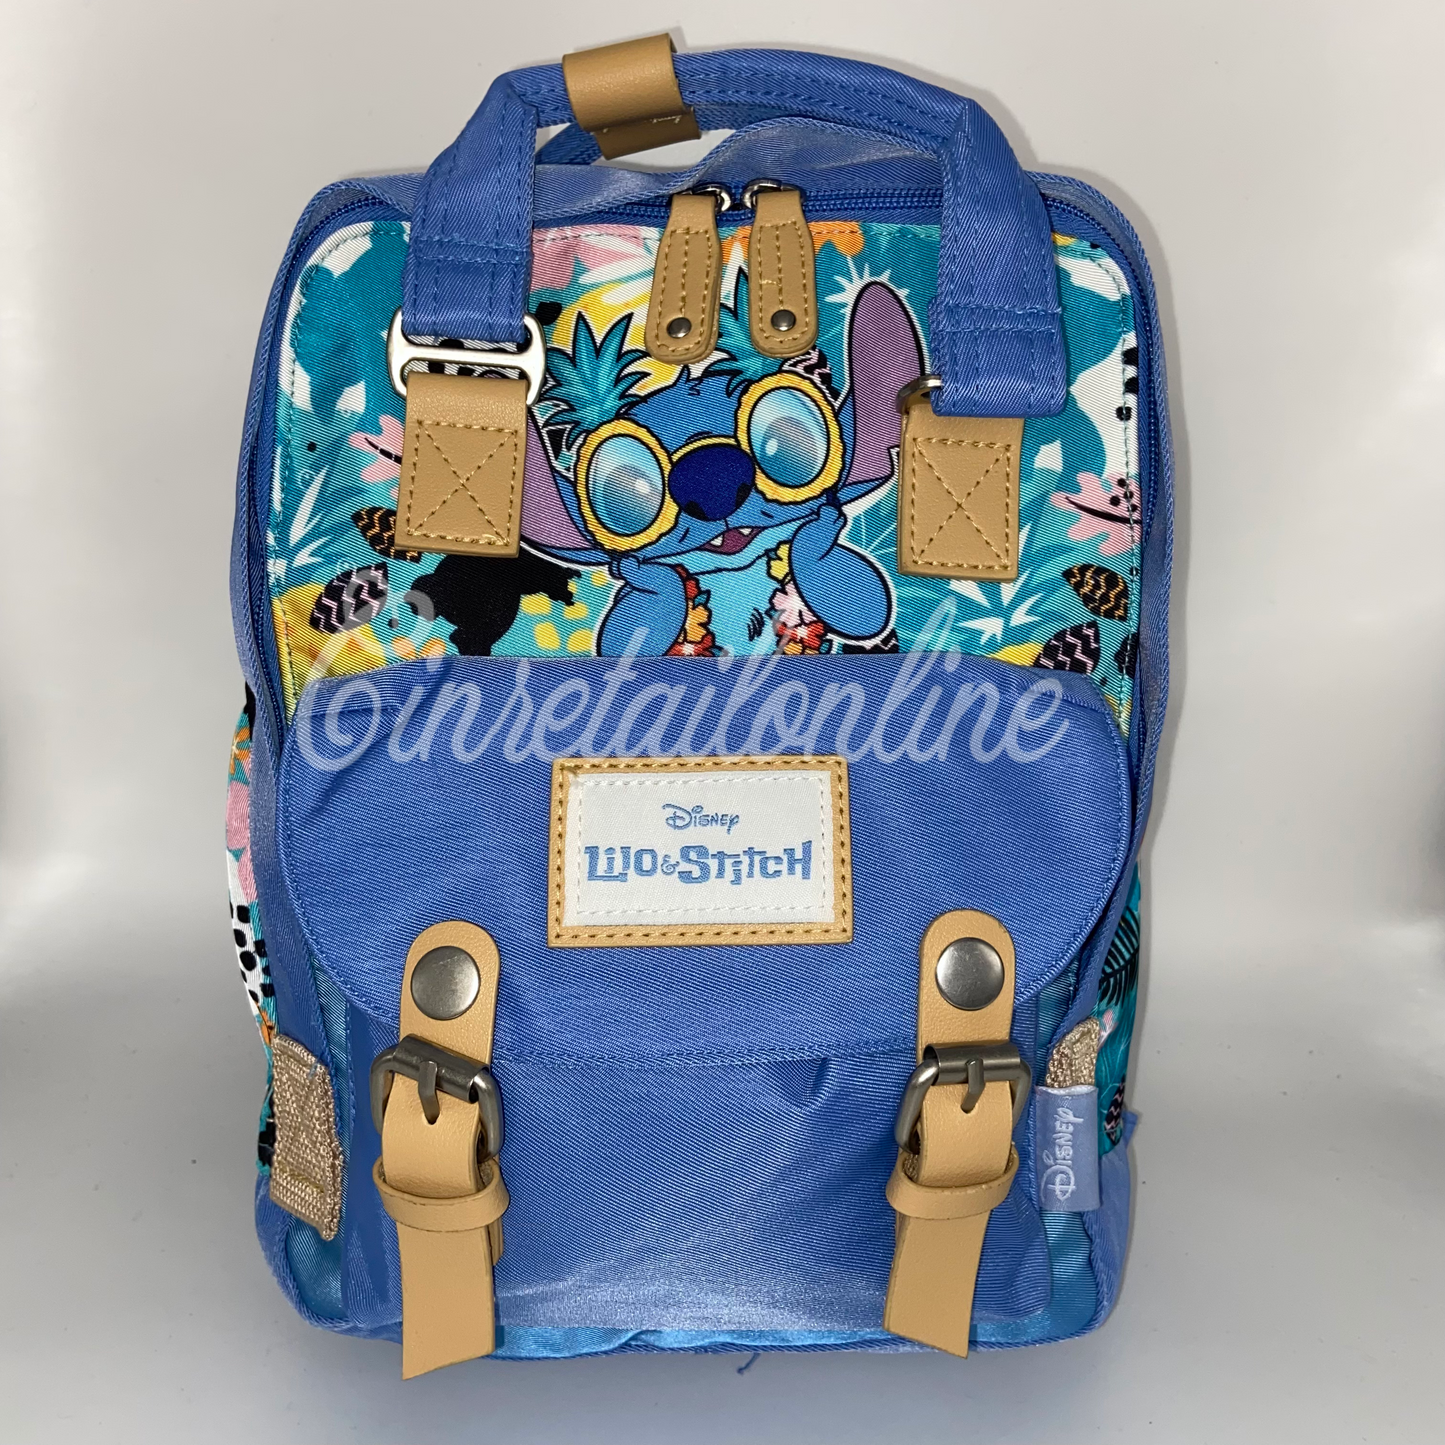 Stitch mini backpack